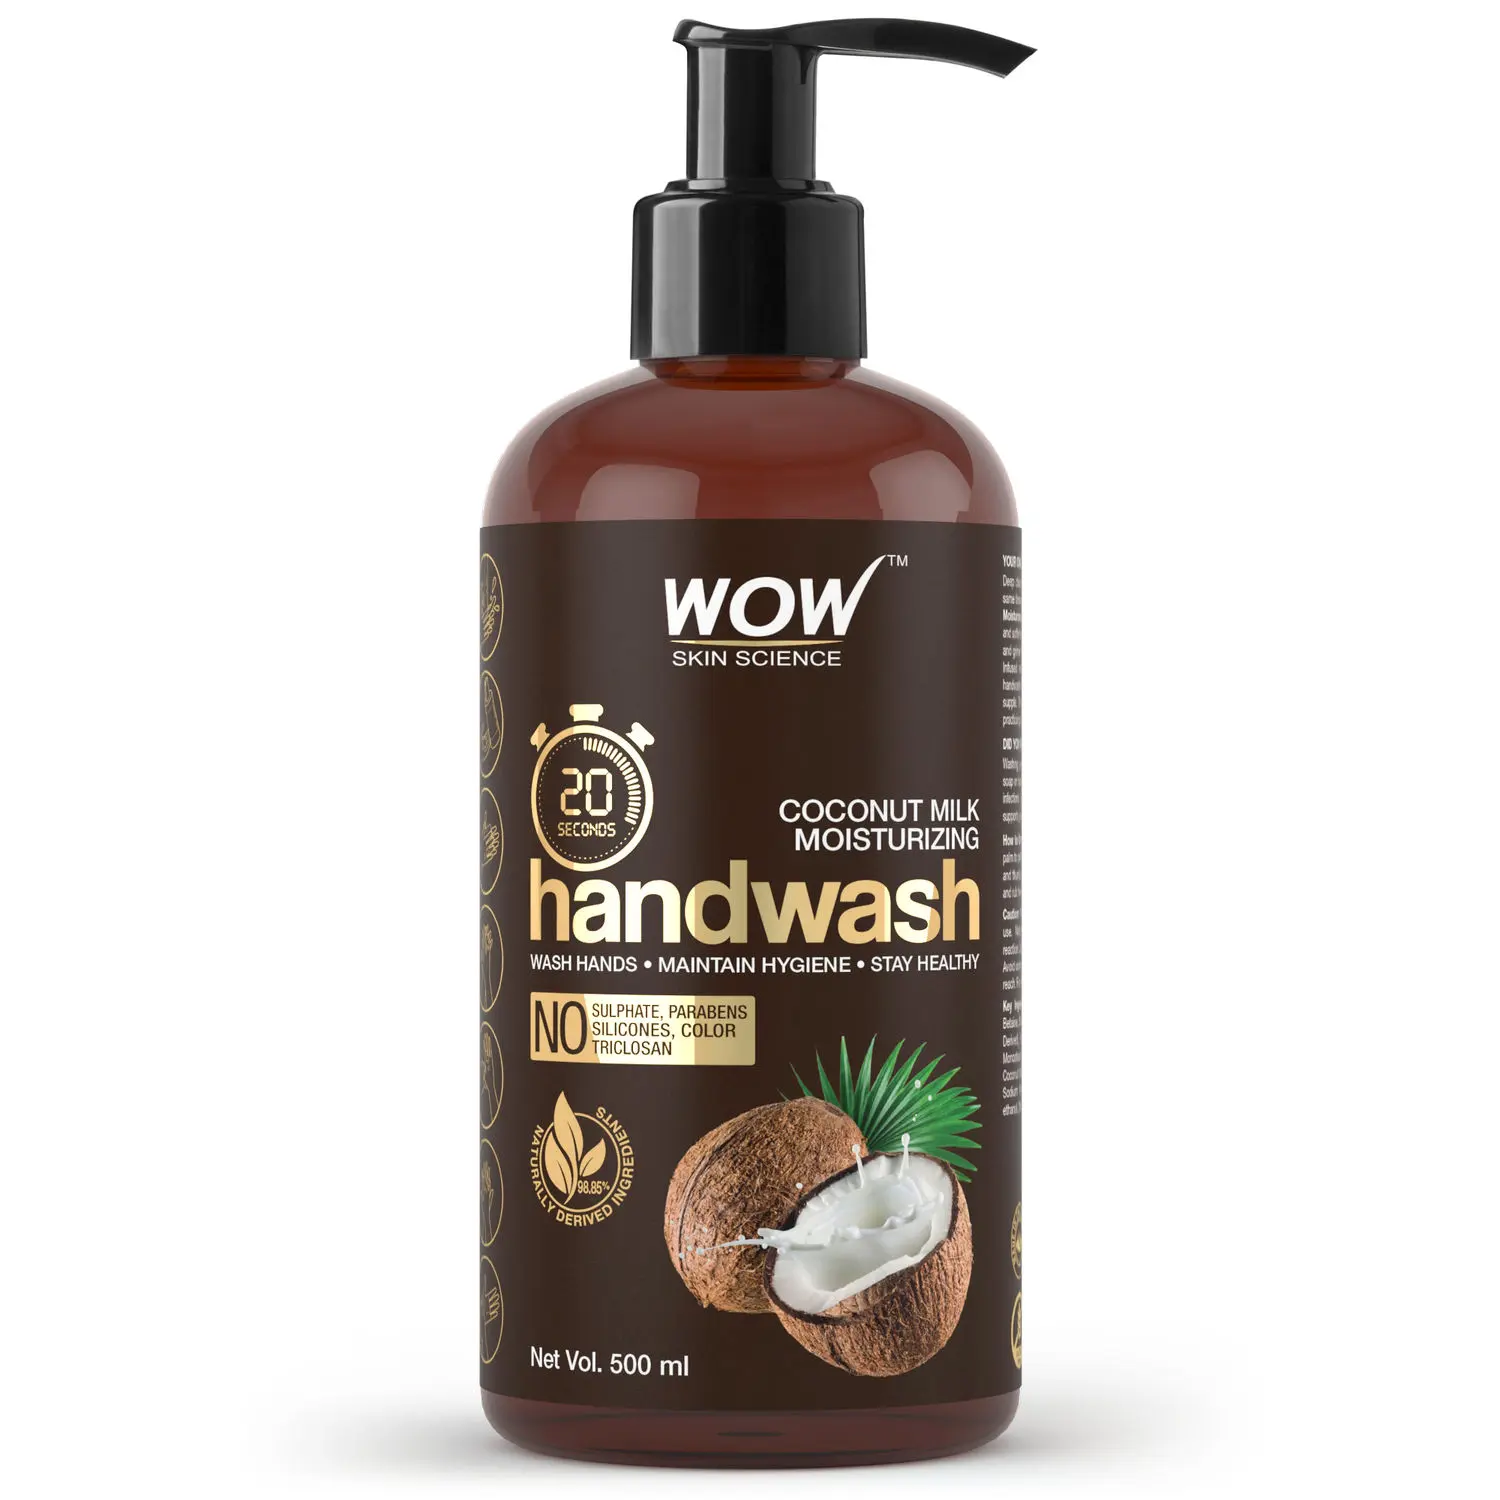 WOW Skin Science Coconut Milk Moisturizing Handwash (500 ml)